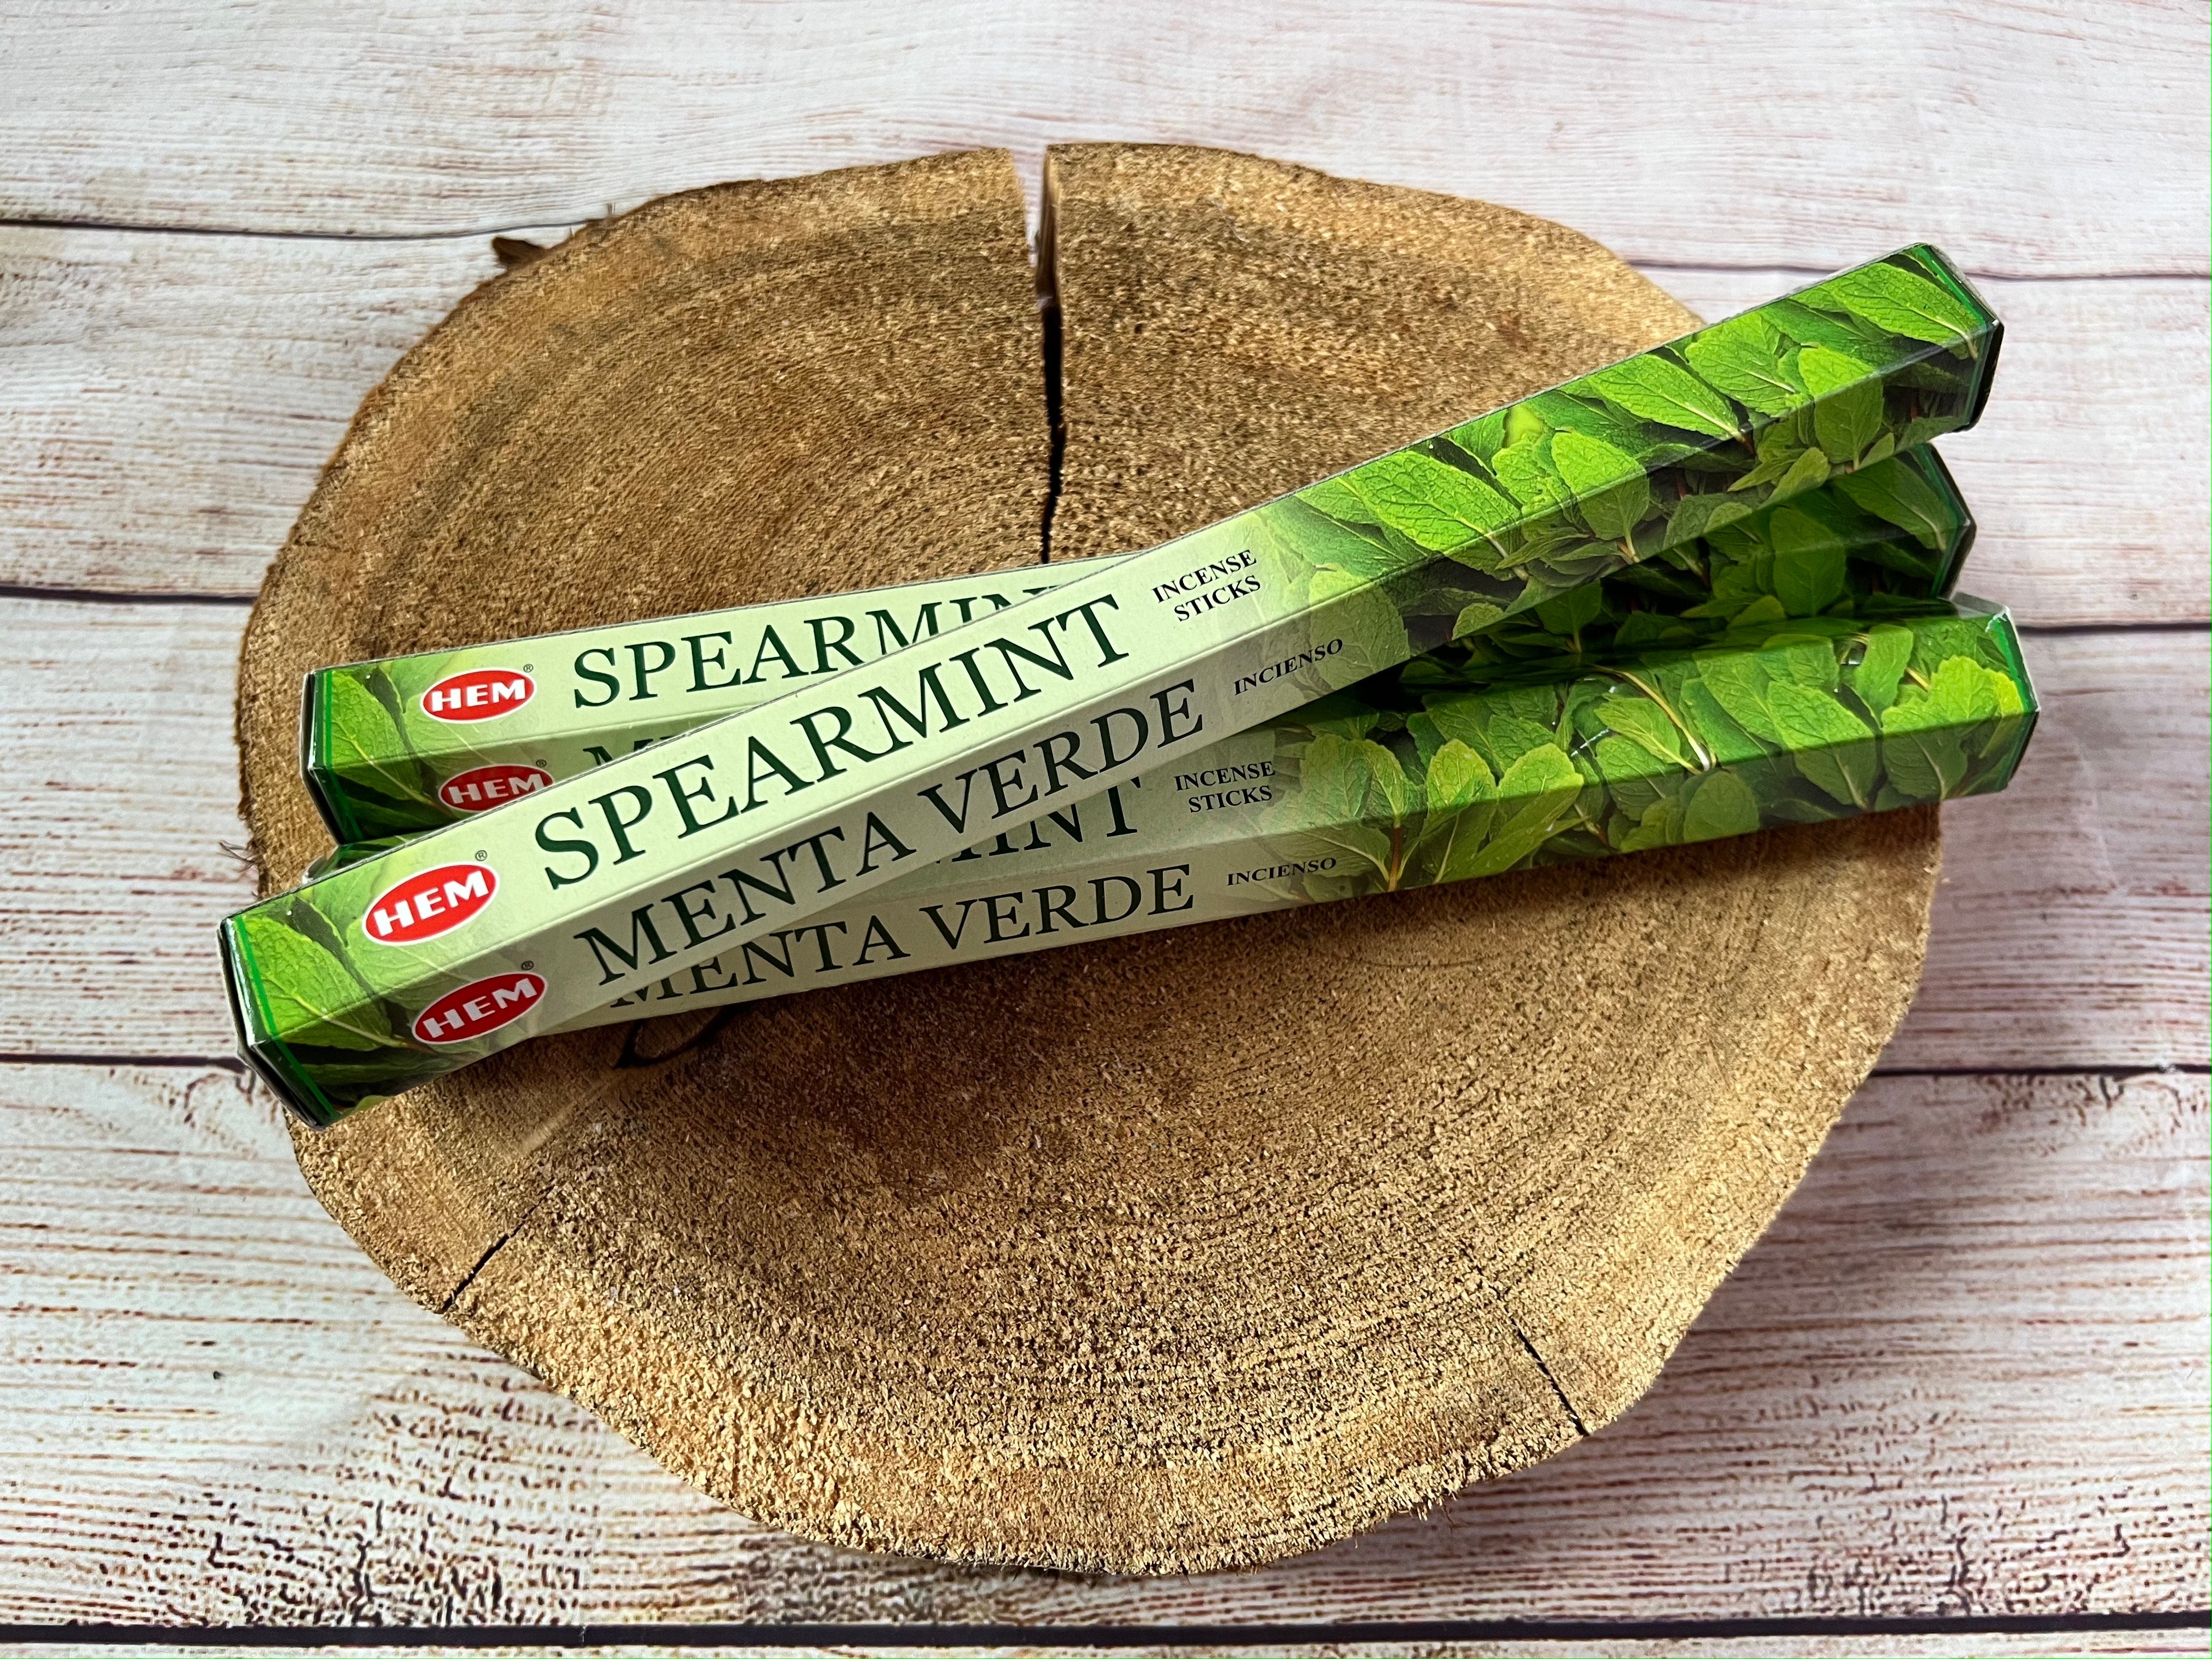 Spearmint Incense Sticks